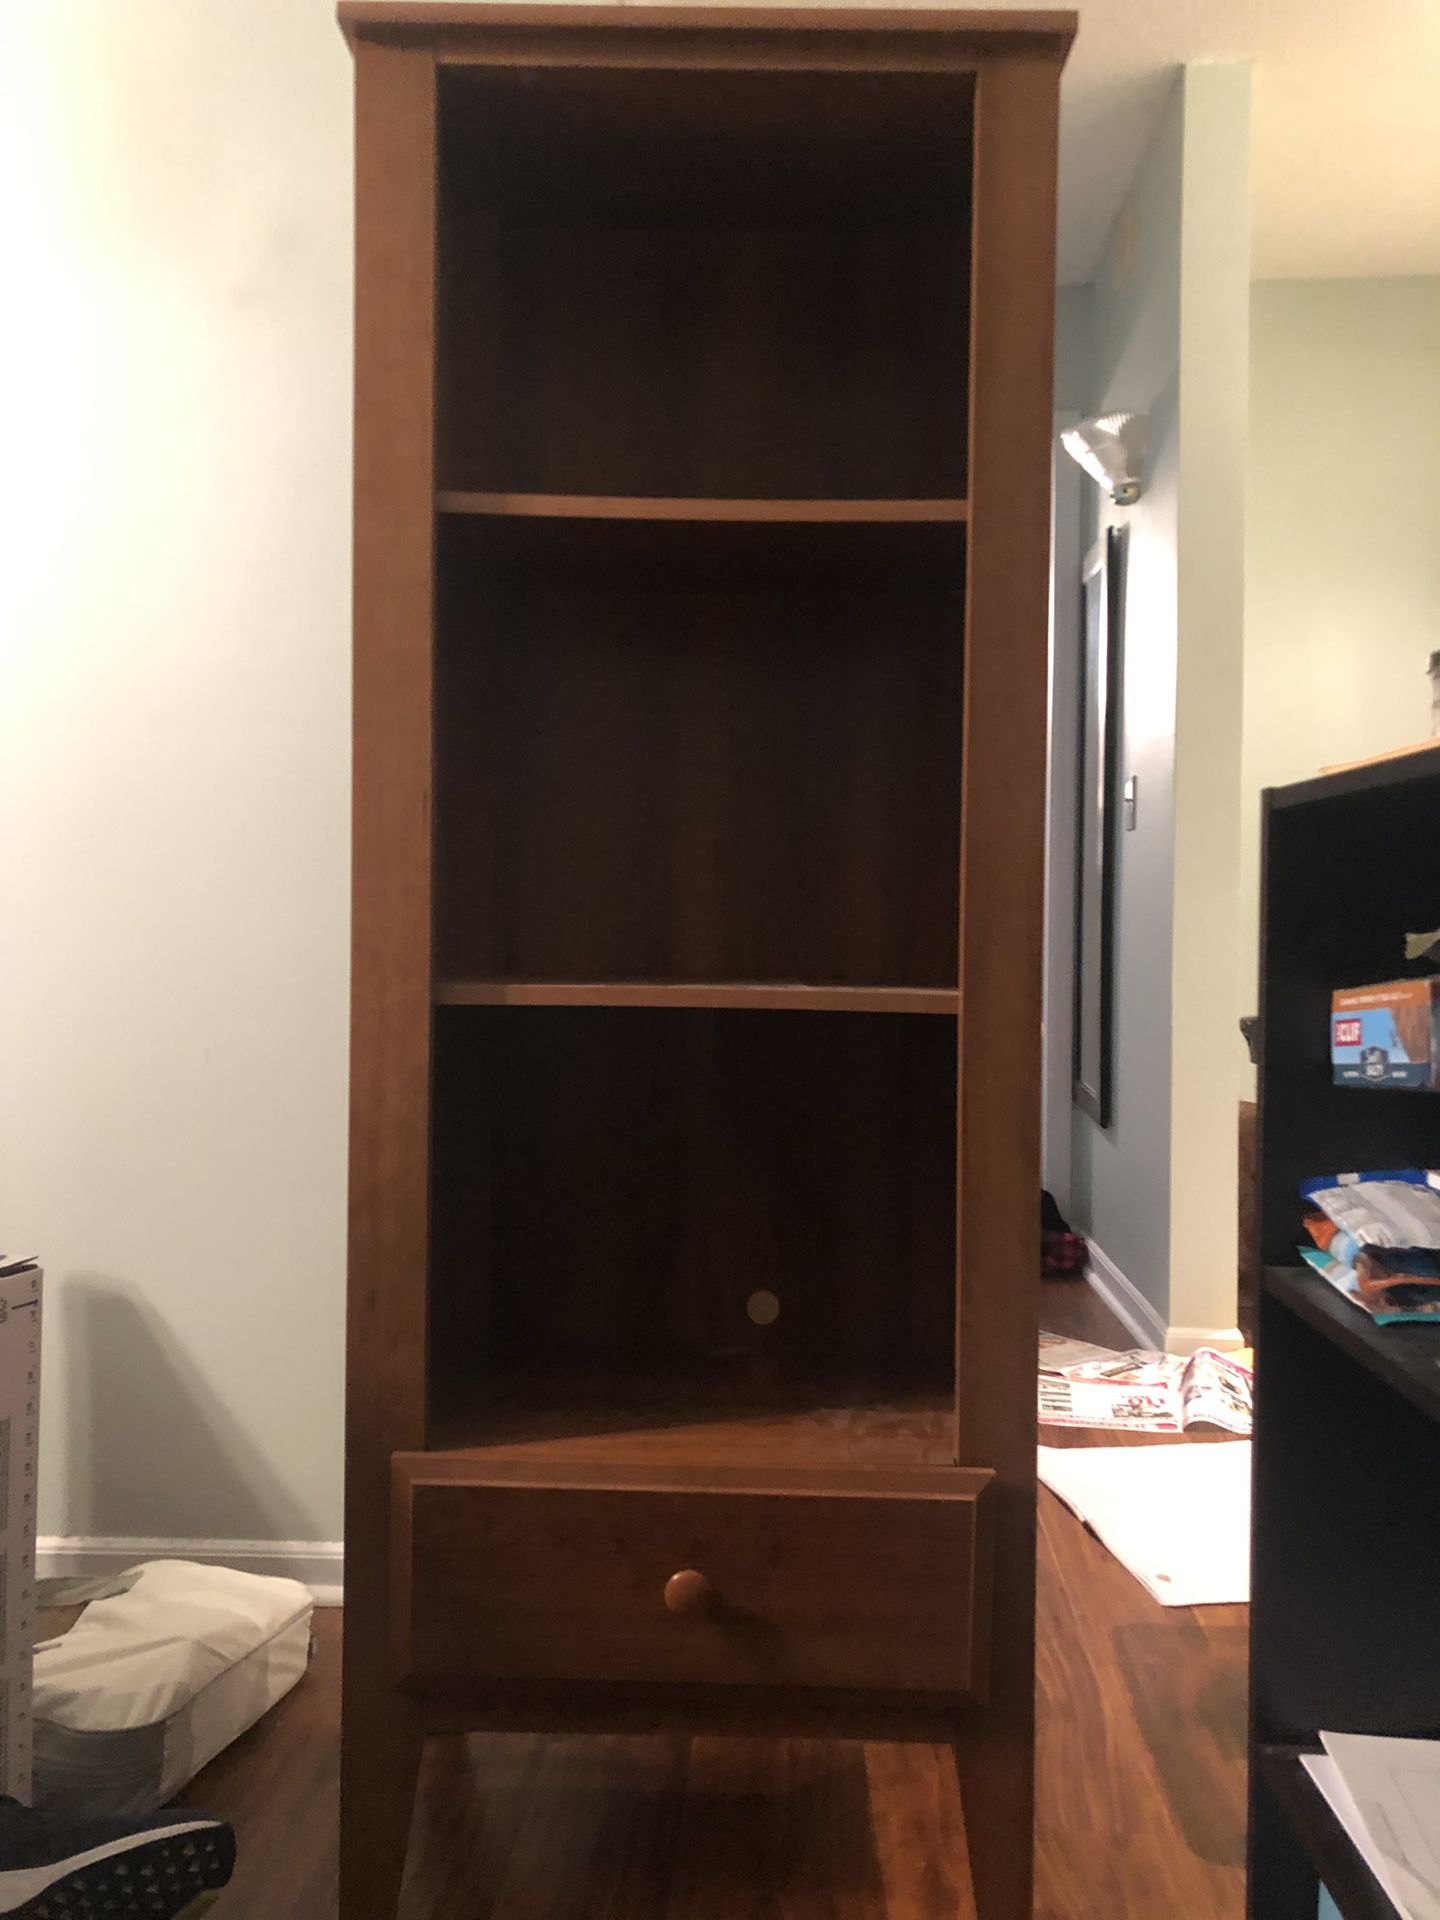 Free wooden bookshelf - pickup only